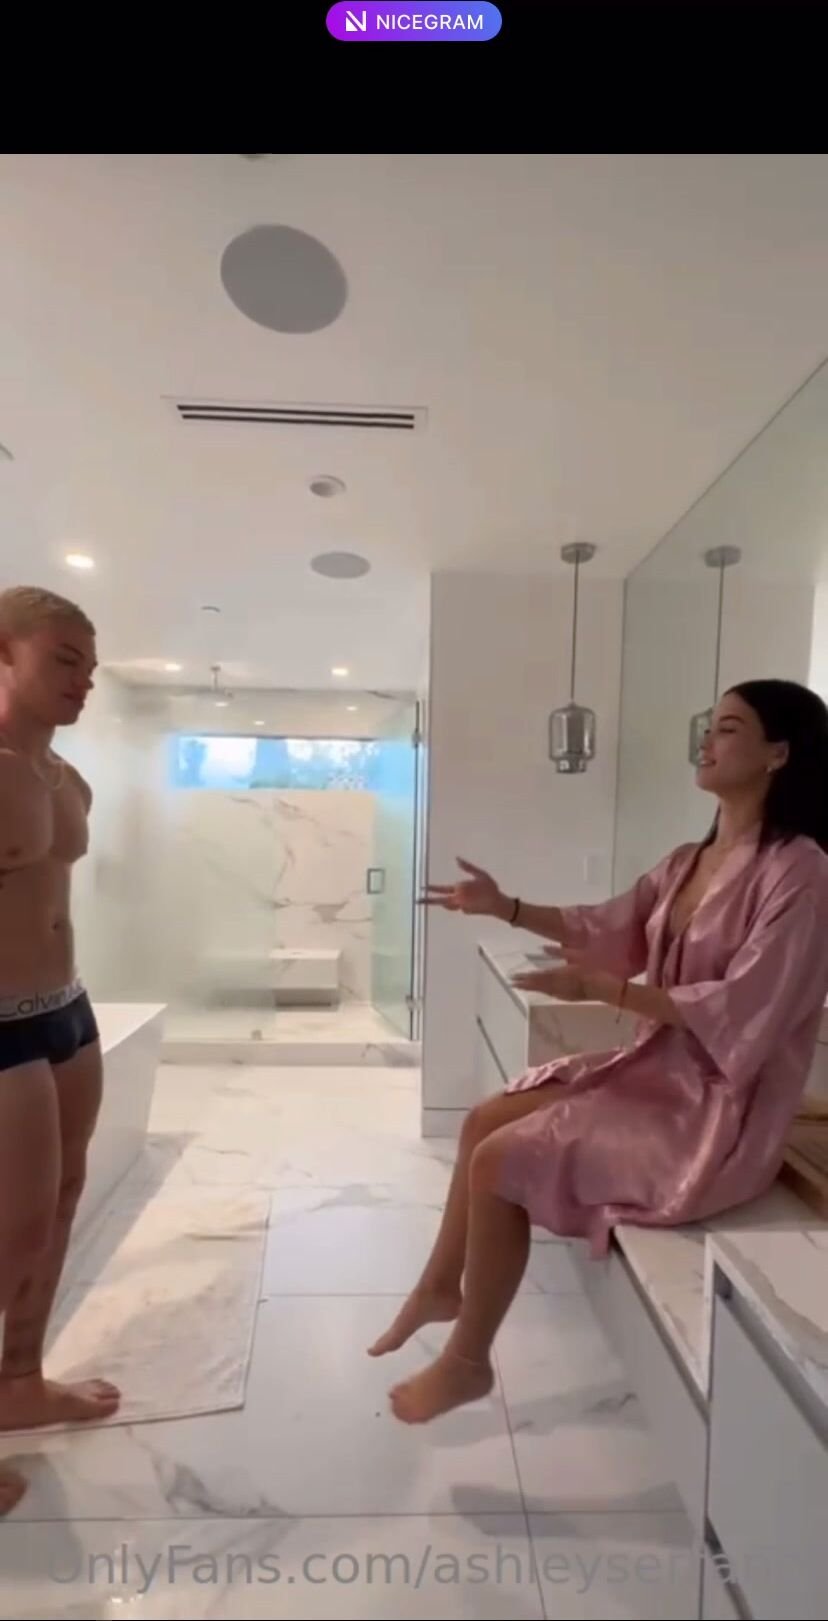 https://viralpornhub.com/es/videos/131962/ashley-serrano-seduces-a-guy-and-passionately-fucking-him-in-bathroom-video/